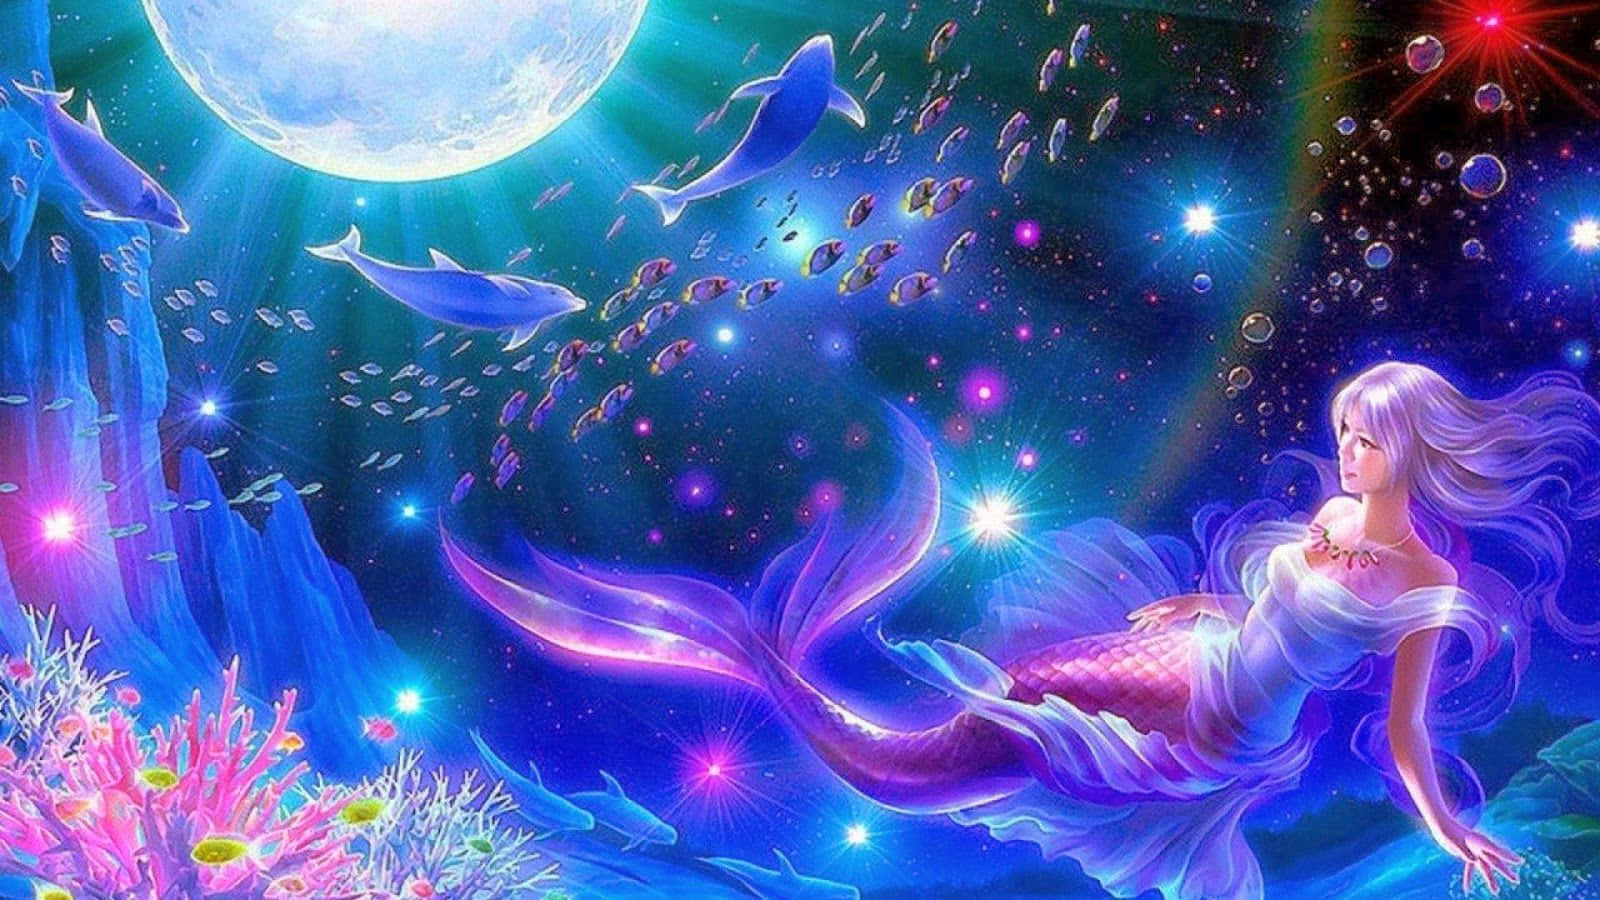 An enchanting mermaid sits atop a rock in an underwater wonderland.